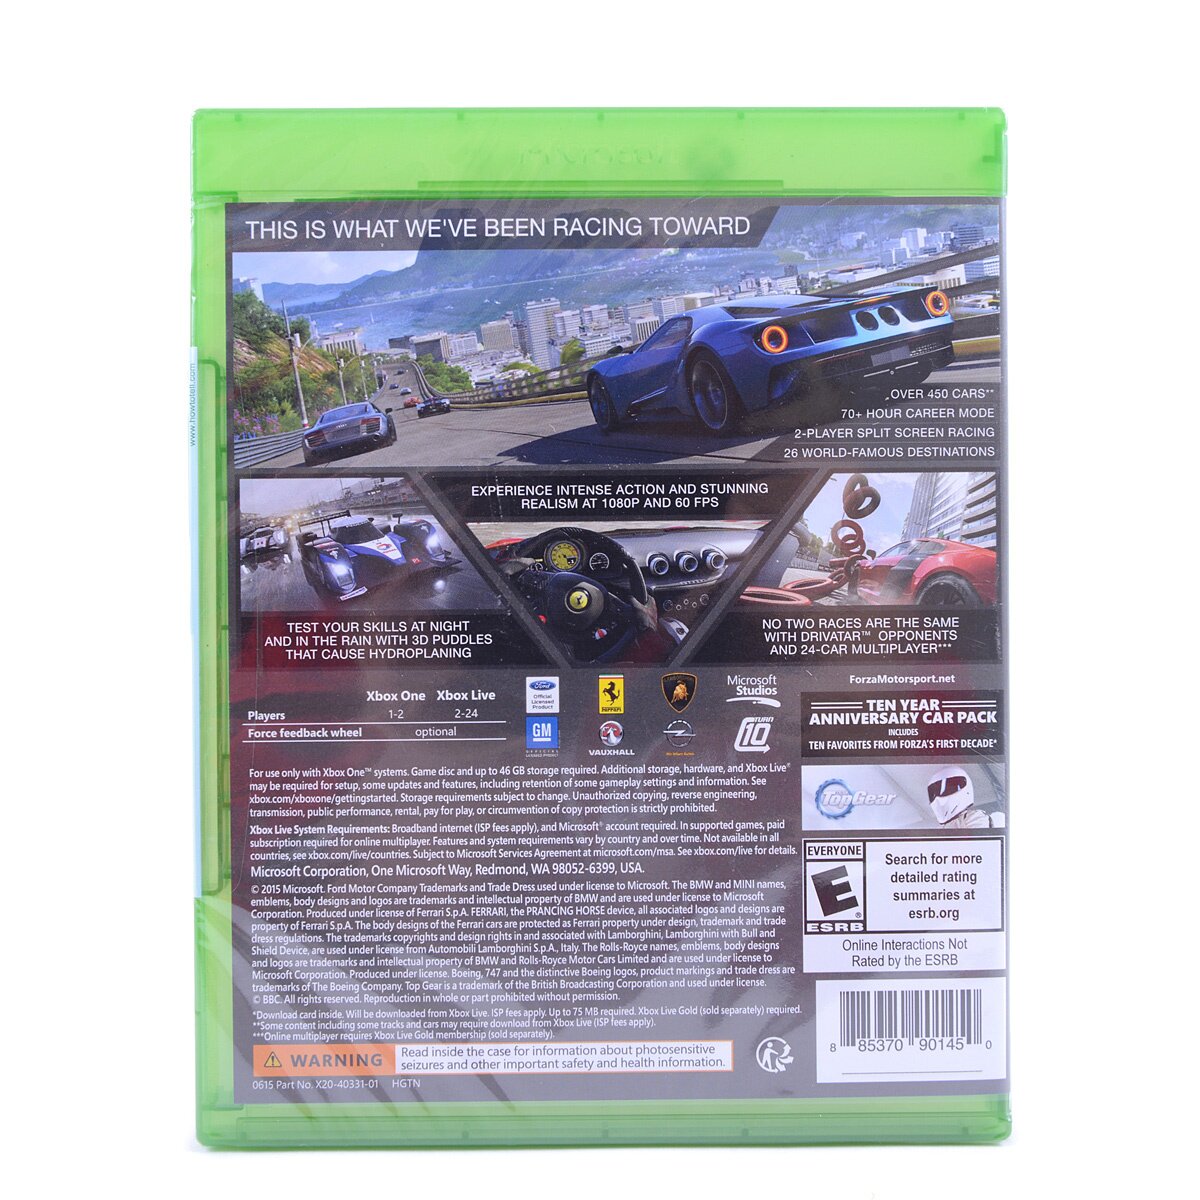 Xbox One Limited Edition Forza Motorsport 6 Bundle - Tokyo Otaku